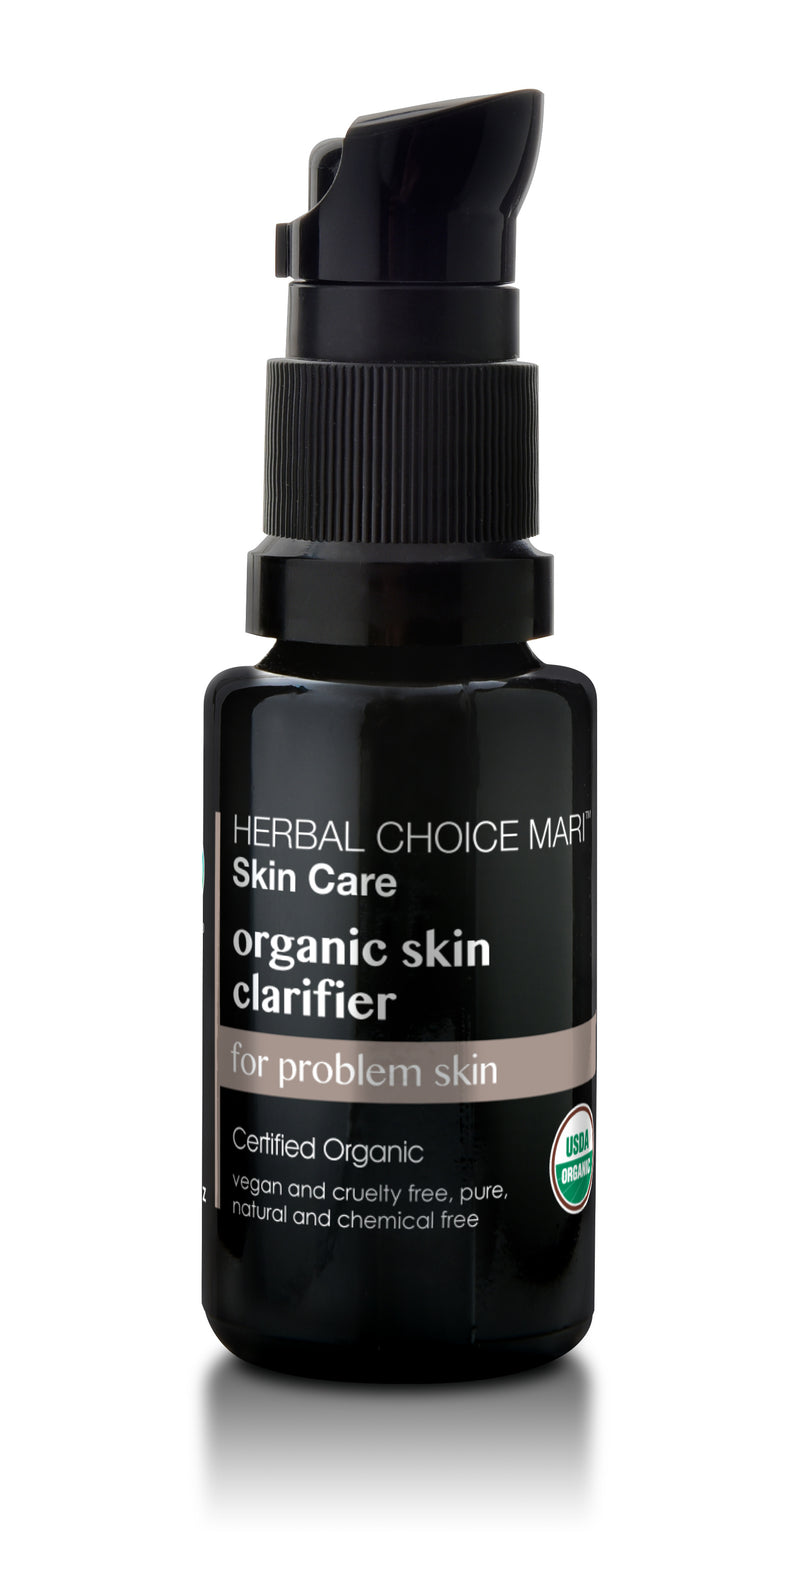 Herbal Choice Mari Organic Skin Clarifier, Problem Skin - Herbal Choice Mari Organic Skin Clarifier, Problem Skin - Herbal Choice Mari Organic Skin Clarifier, Problem Skin